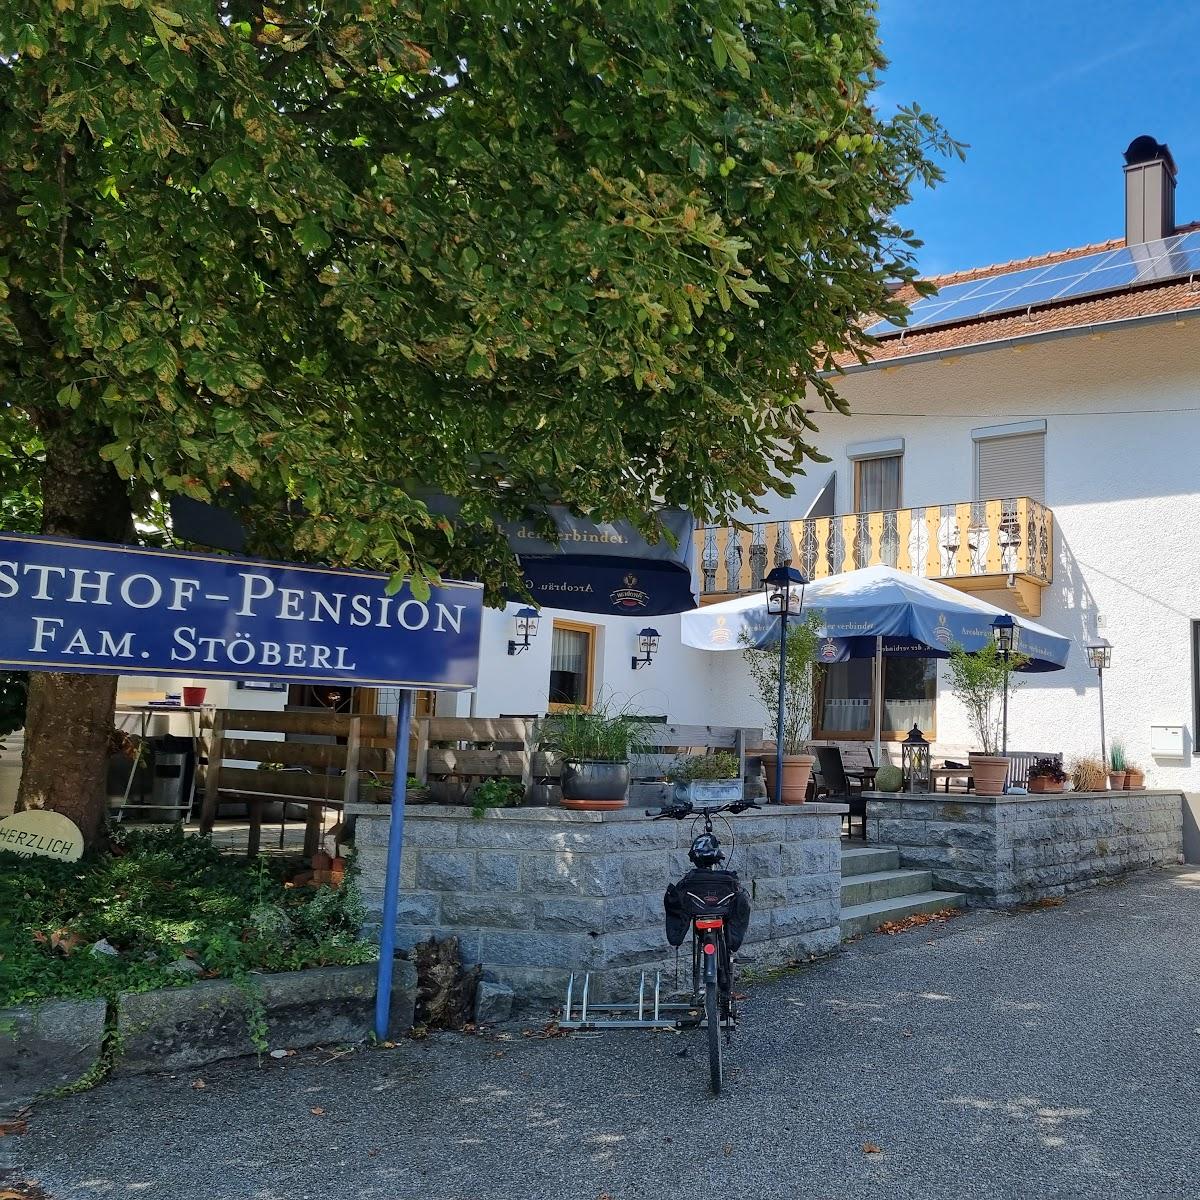 Restaurant "Anton Stöberl" in Mariaposching